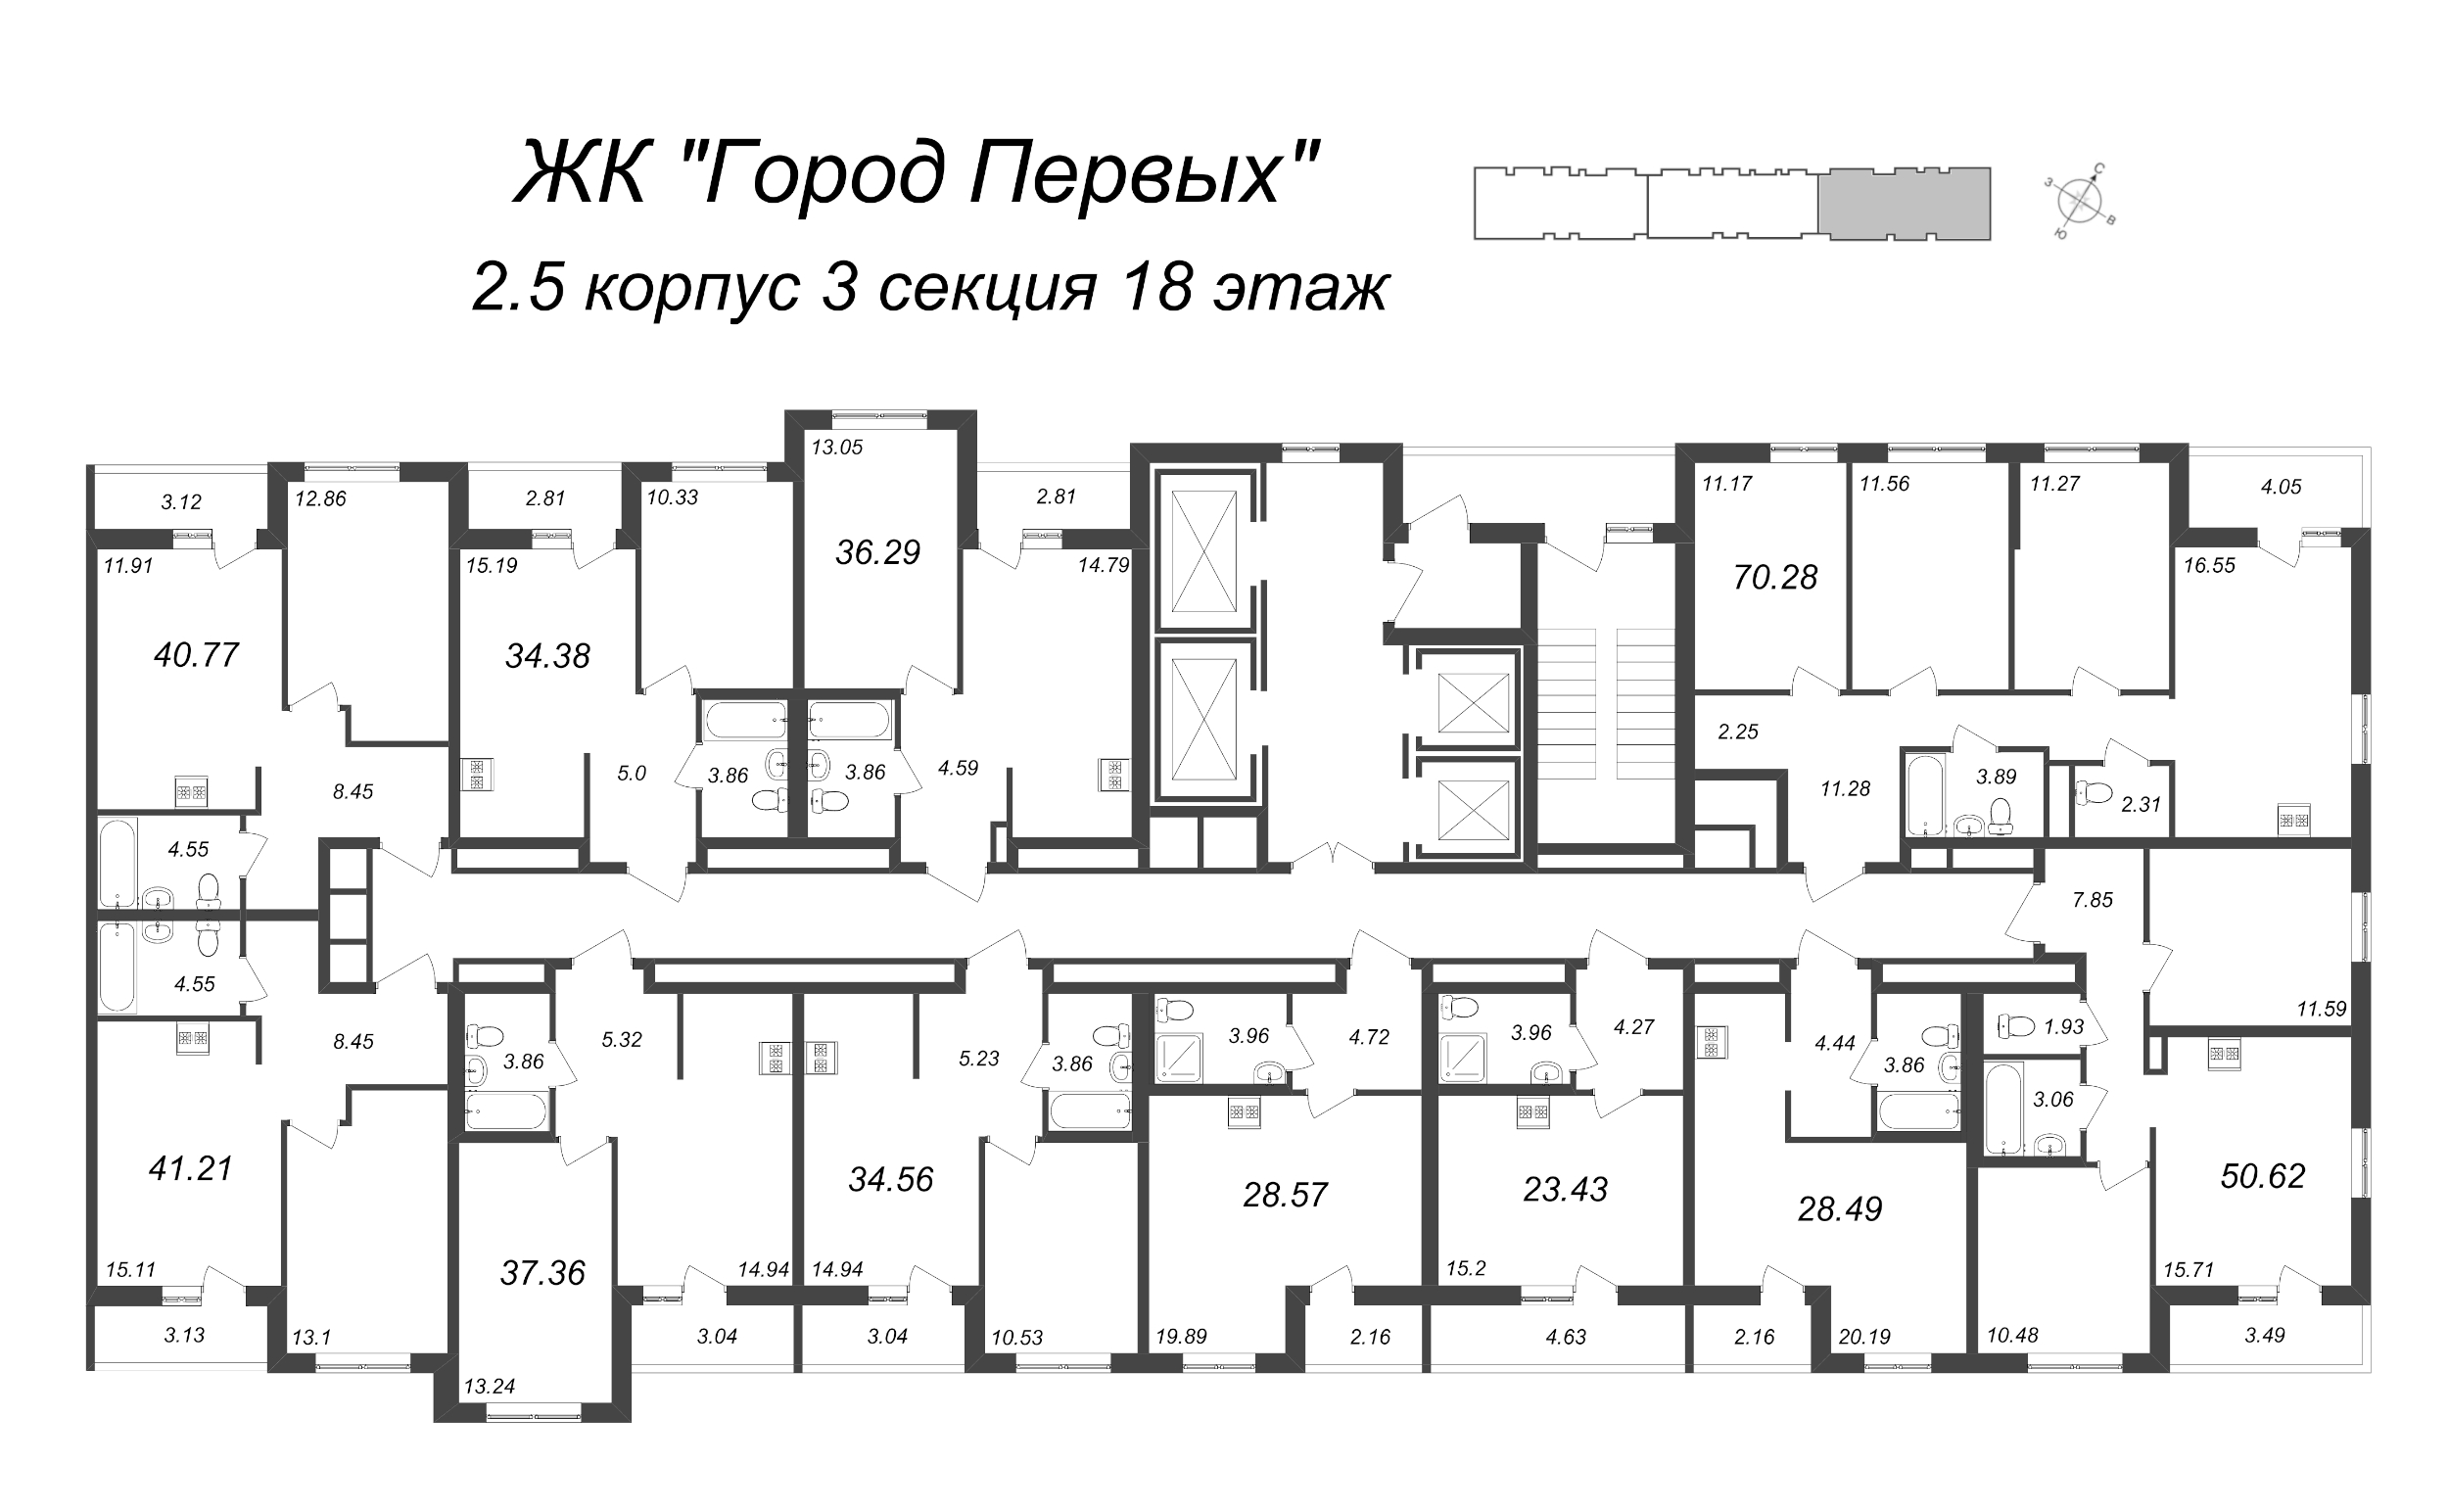 2-комнатная (Евро) квартира, 36.29 м² - планировка этажа